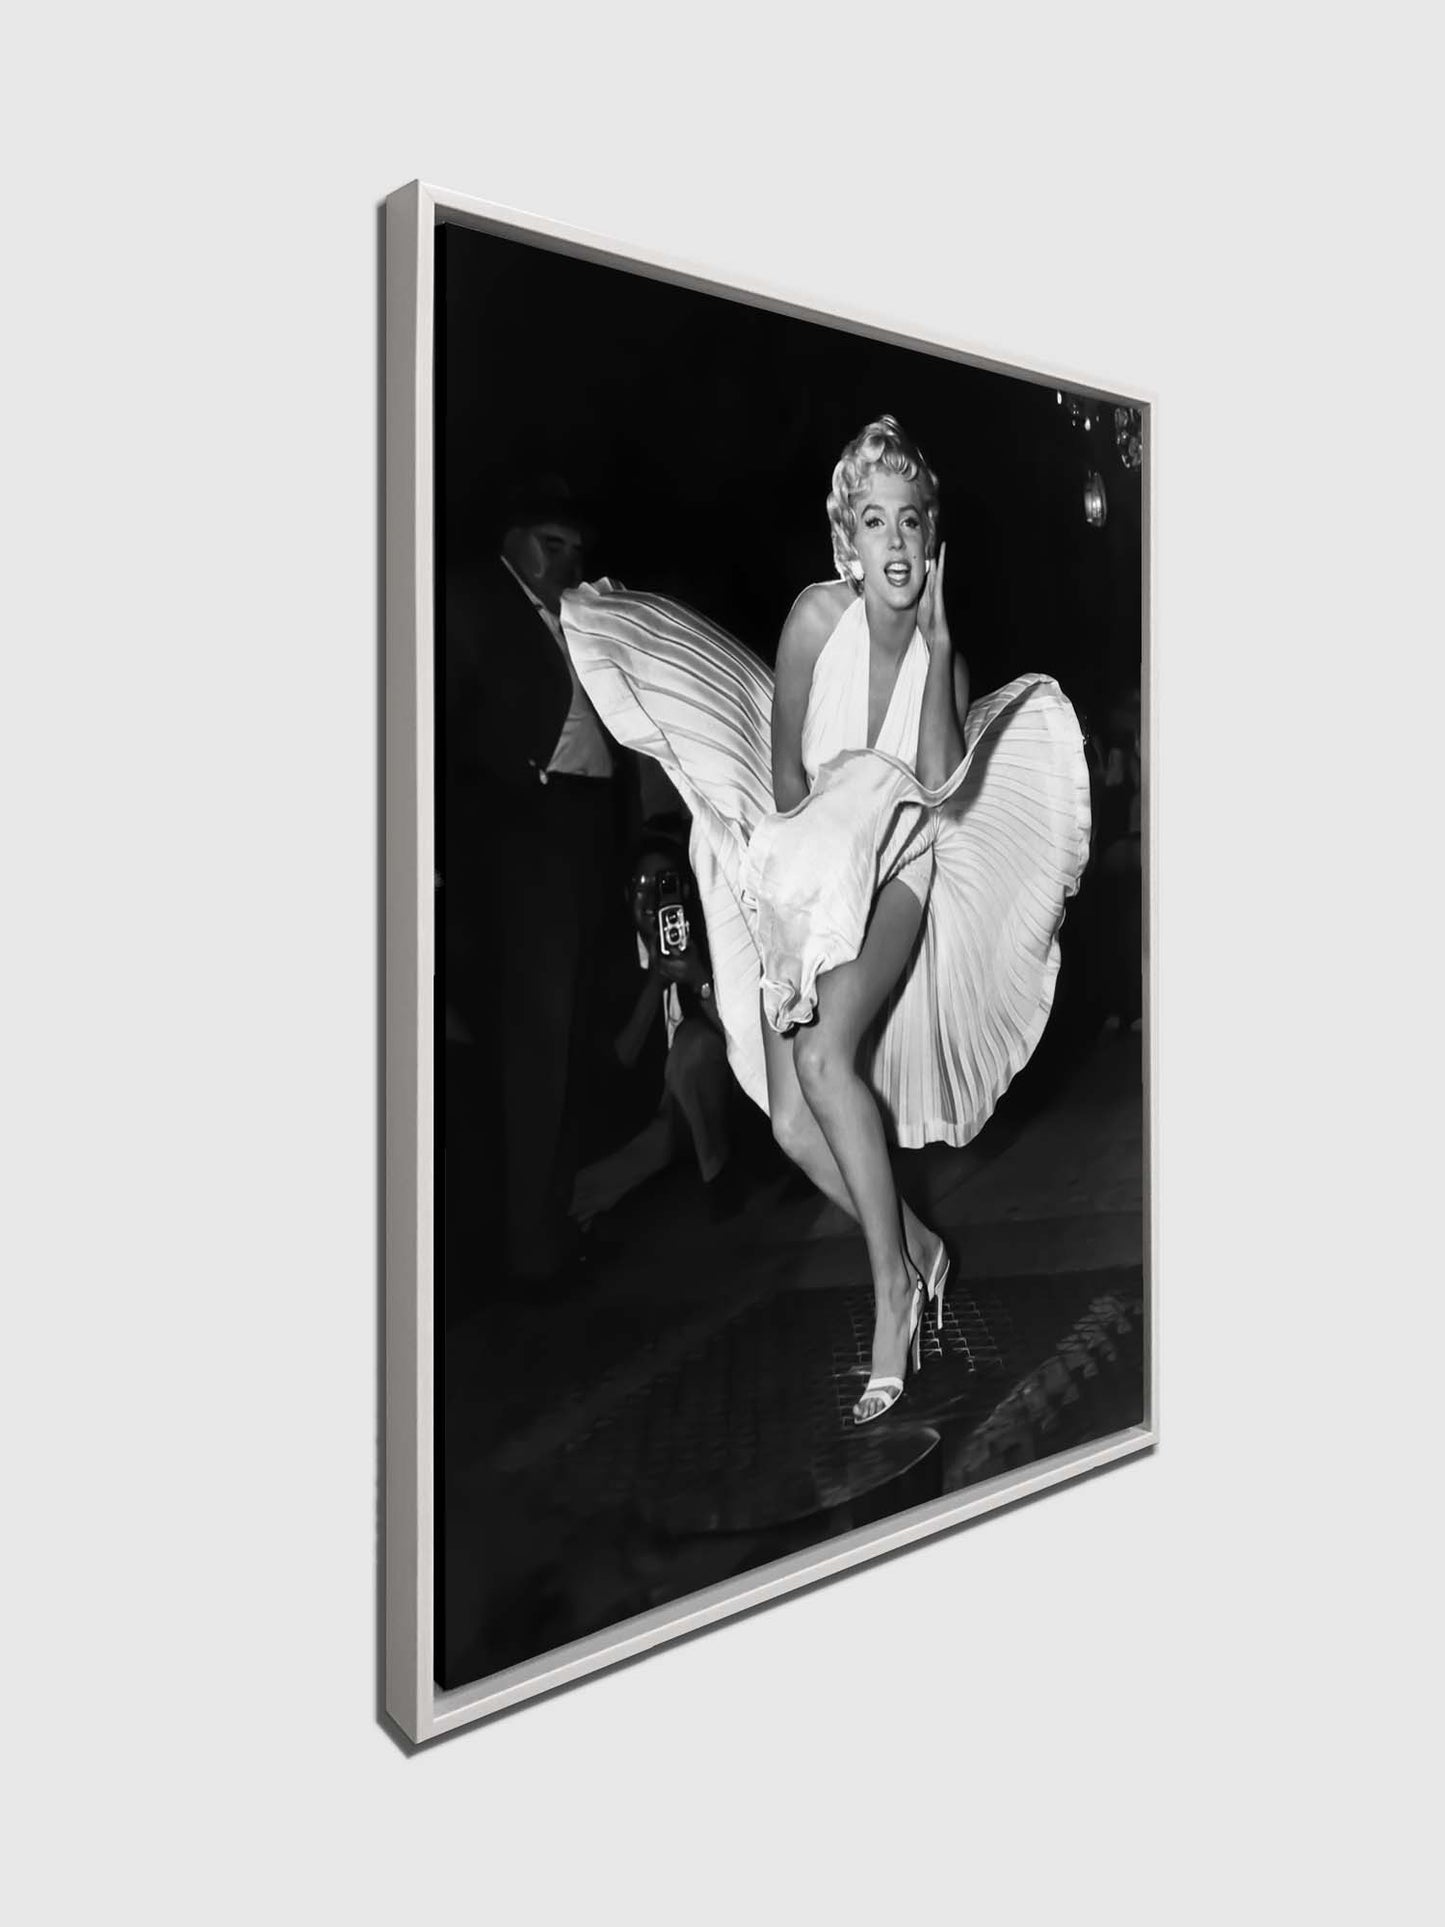 Wall Art-Iconic Scene of Marilynn in White dress- Canvas Print